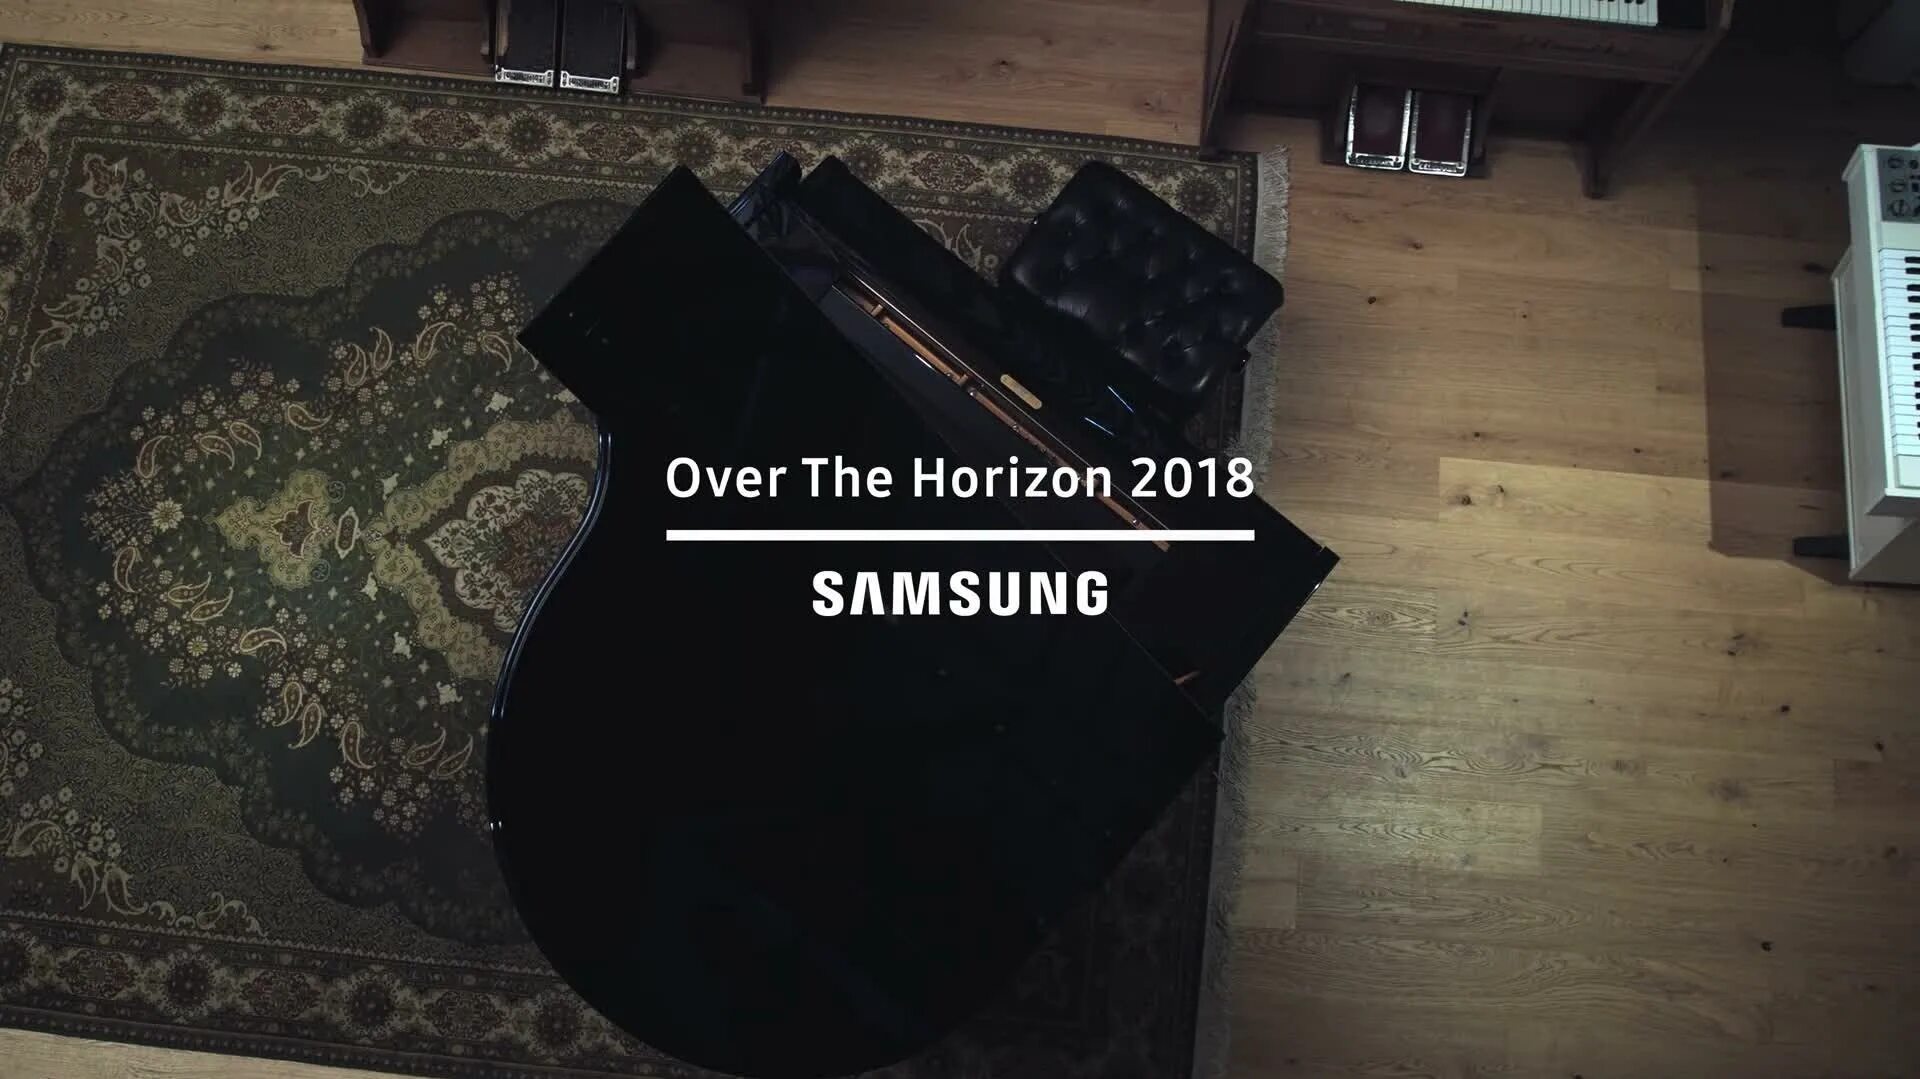 Over the Horizon 2018. Samsung over the Horizon альбом. Samsung over the Horizon normal booting. Samsung over the Horizon 2009 альбом.